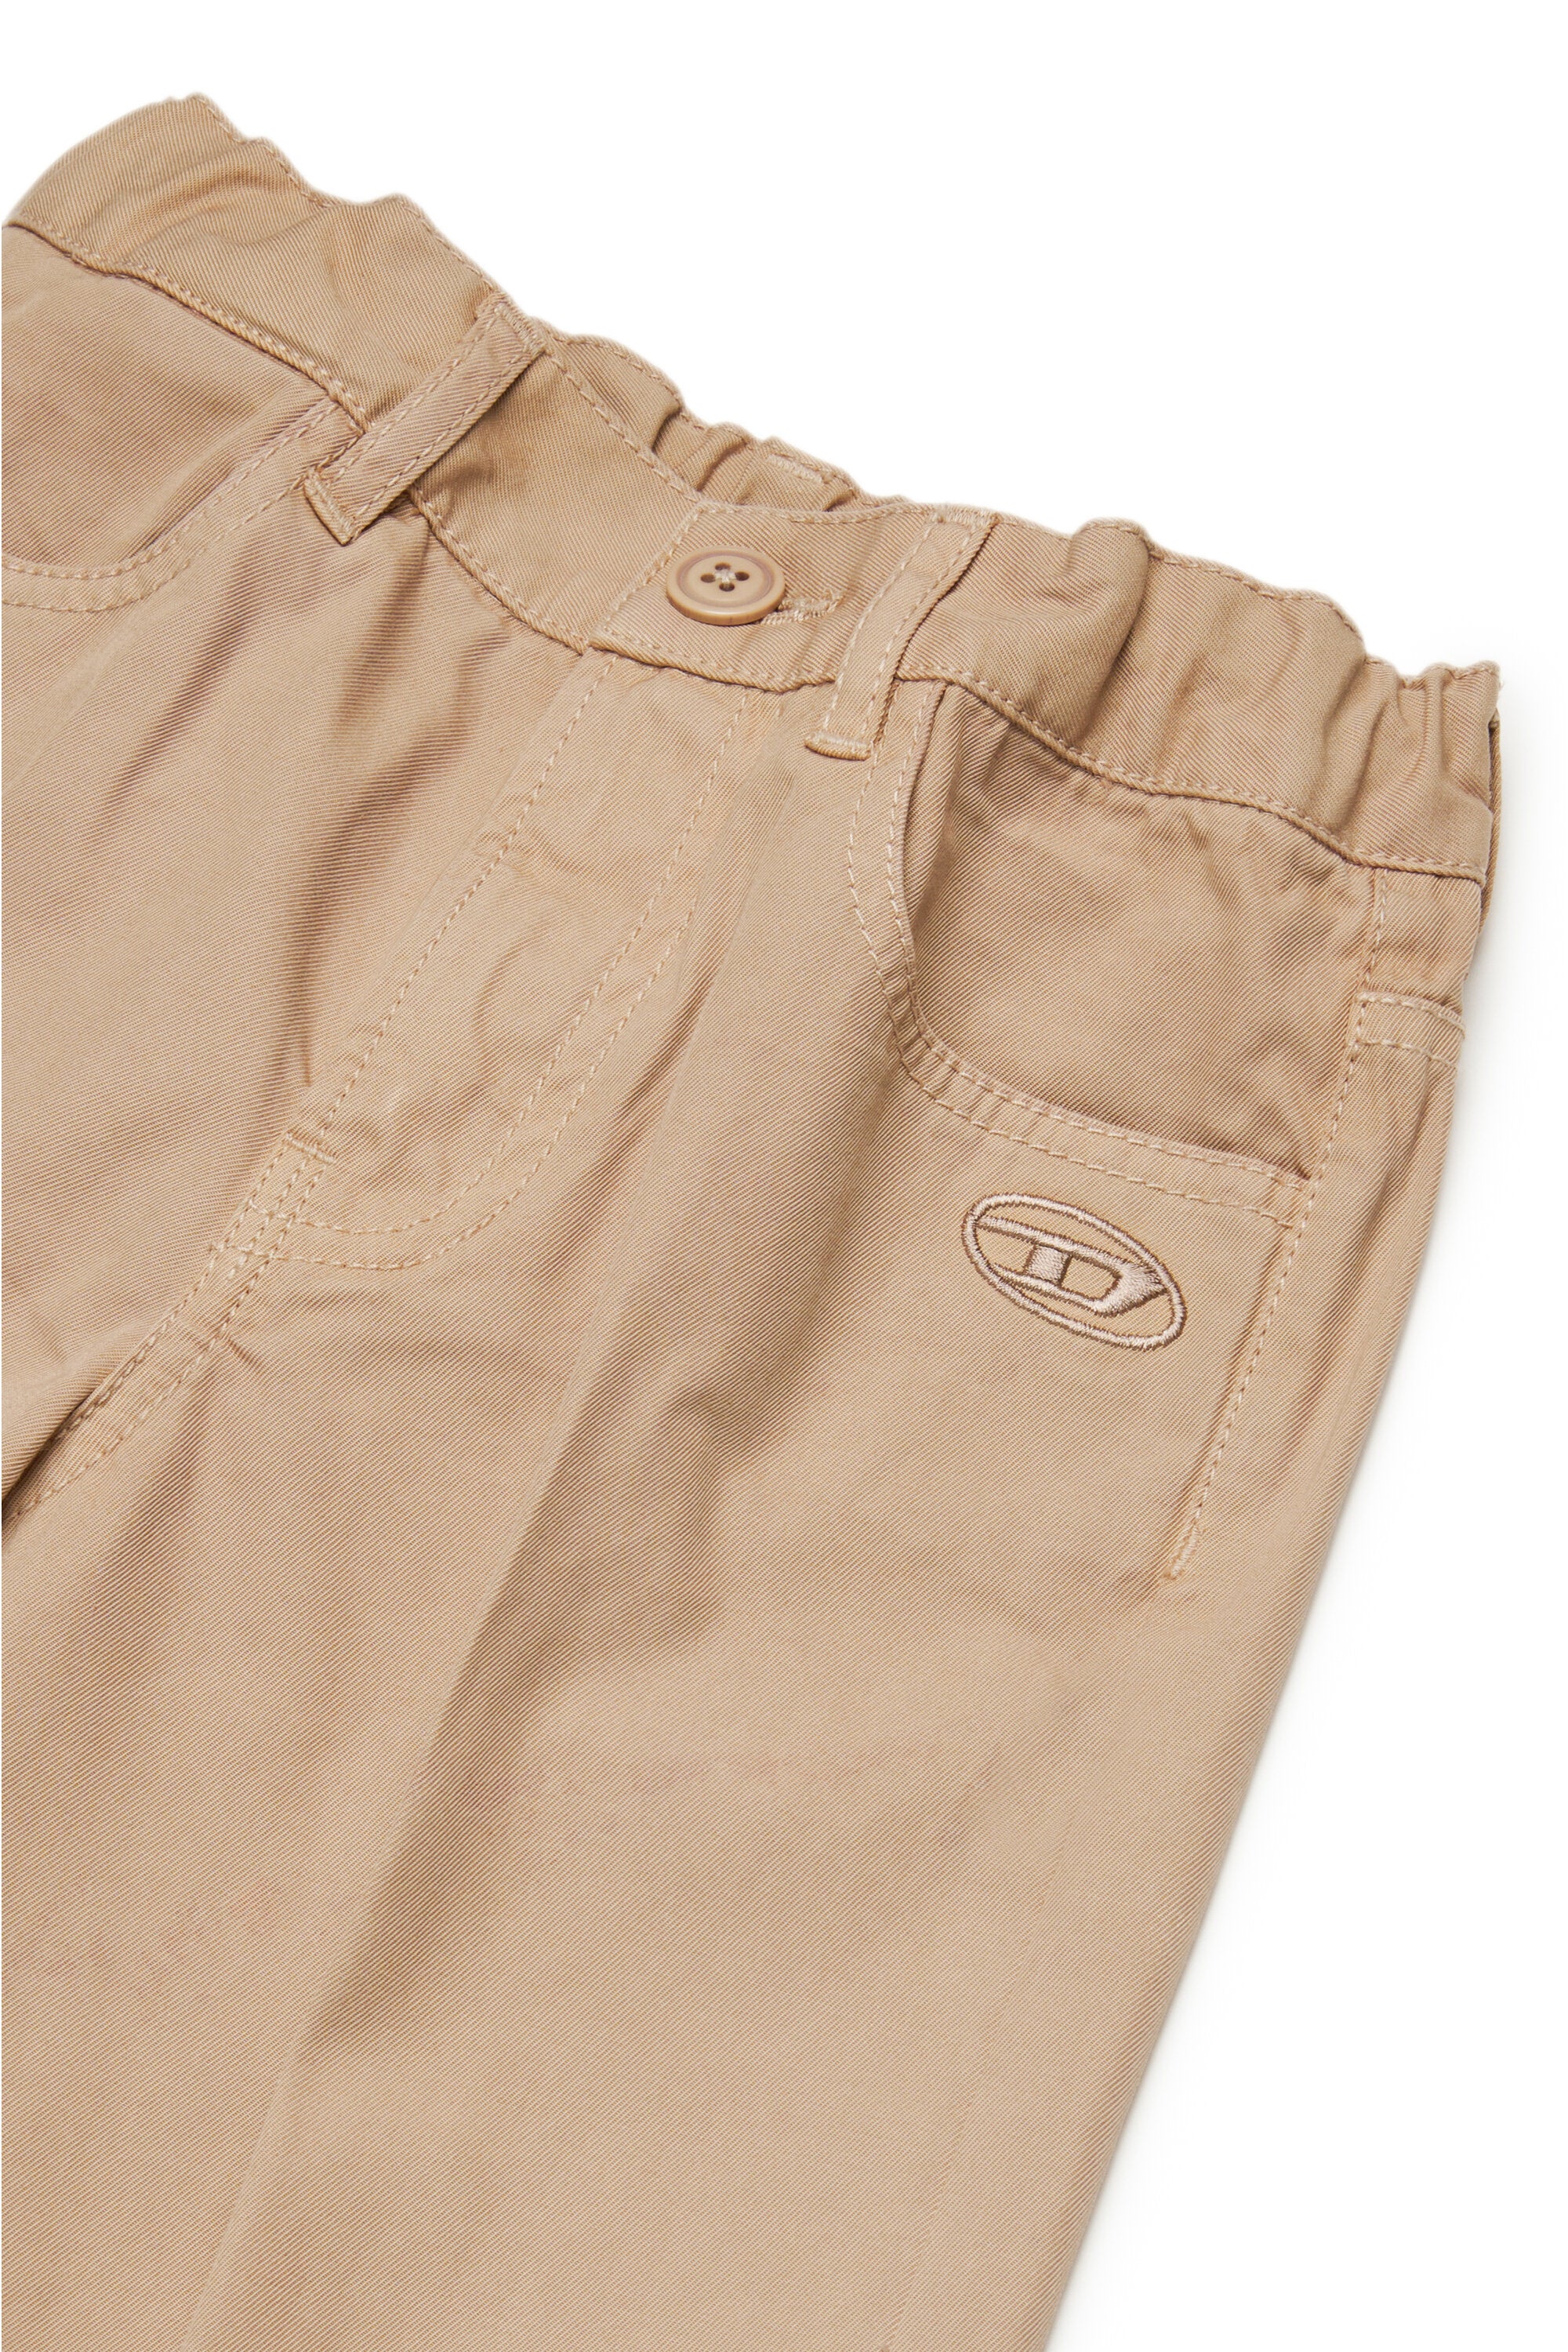 Oval D branded wide gabardine trousers